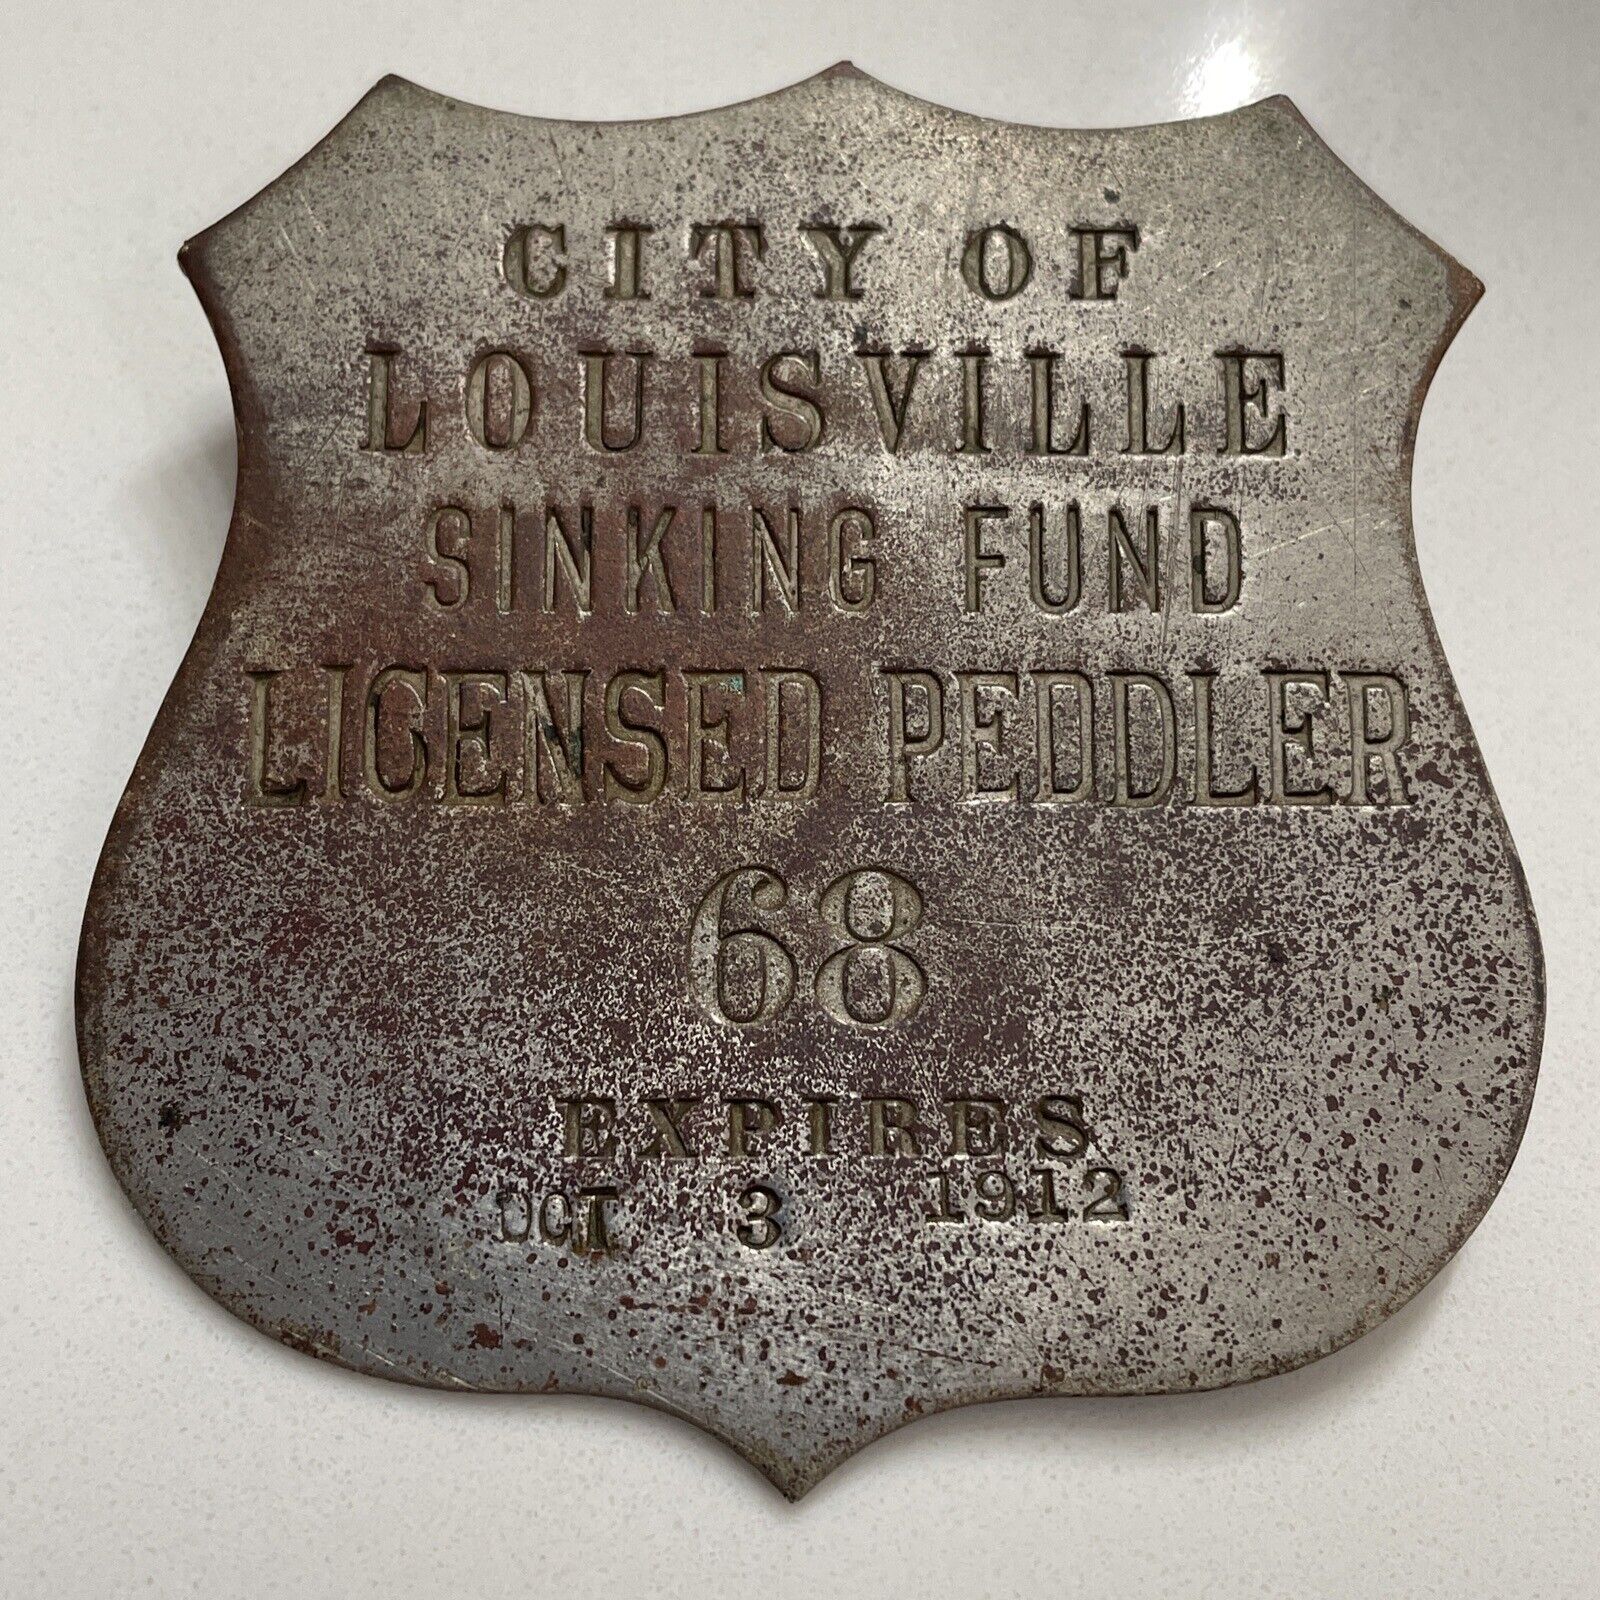 RARE VINTAGE 1912 LICENSED PEDDLER BADGE Louisville KY Sinking Fund #68 2.75\